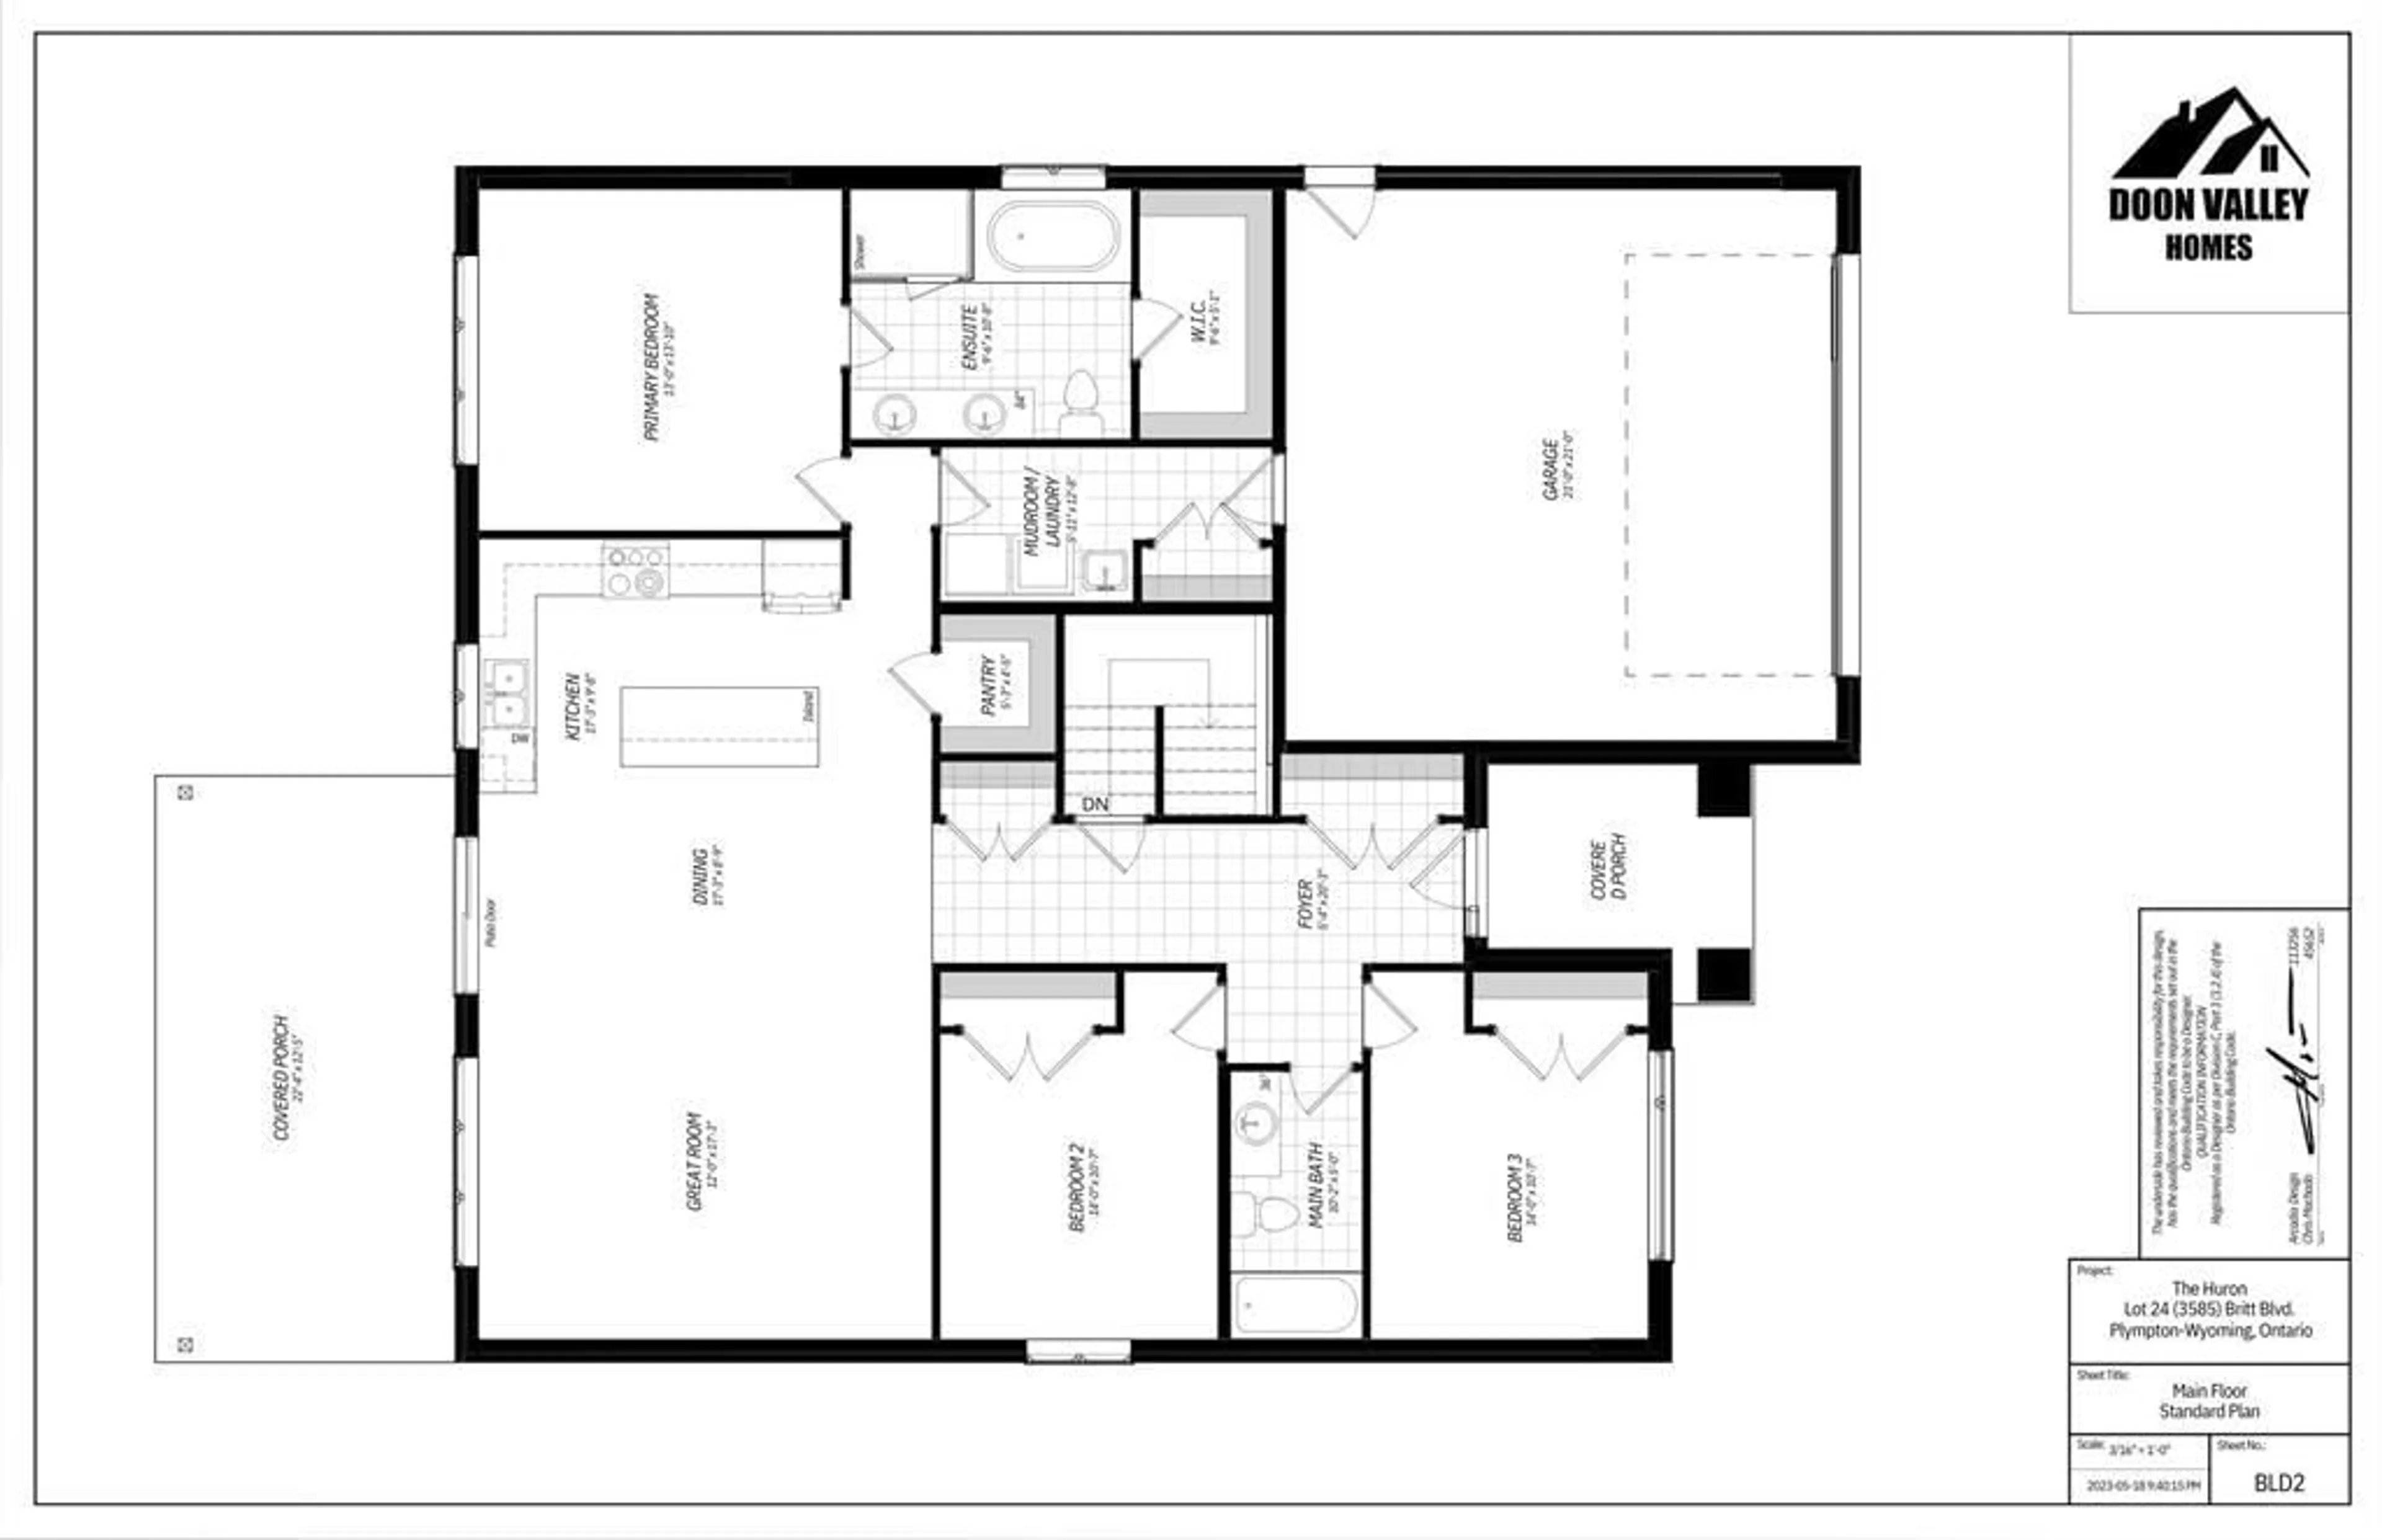 Floor plan for 3585 BRITT Blvd, Plympton-Wyoming Ontario N0N1R0